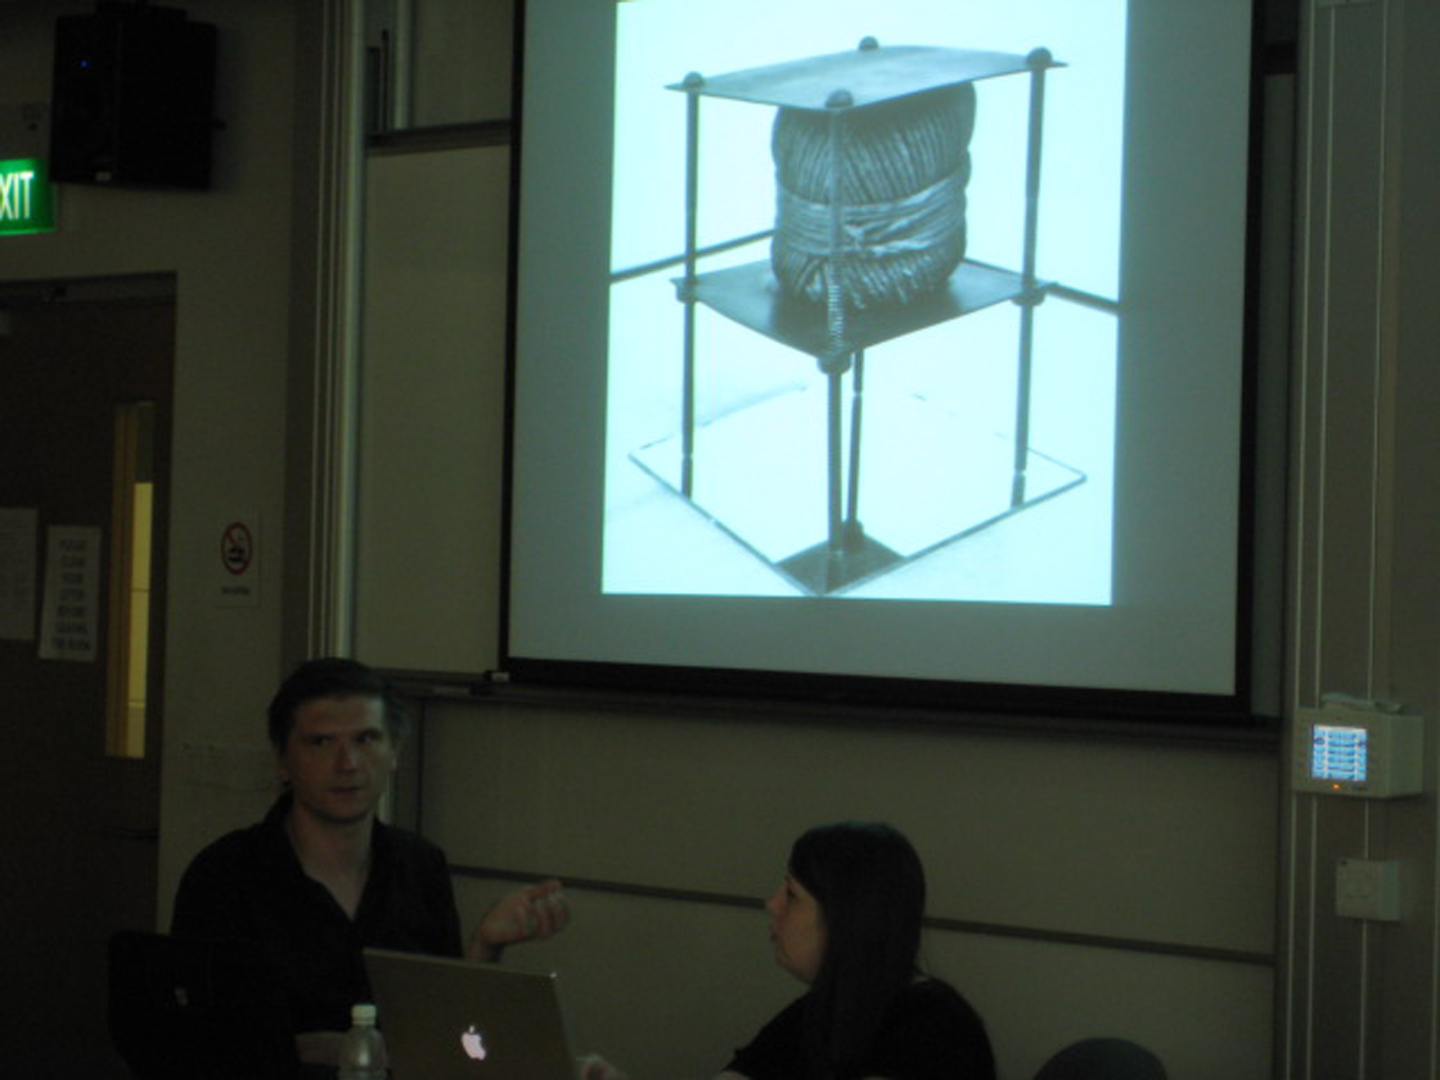 ©ISEA2008: 14th International Symposium on Electronic Art, Natalie Bewernitz and Marek Goldowski, Secret Sounds